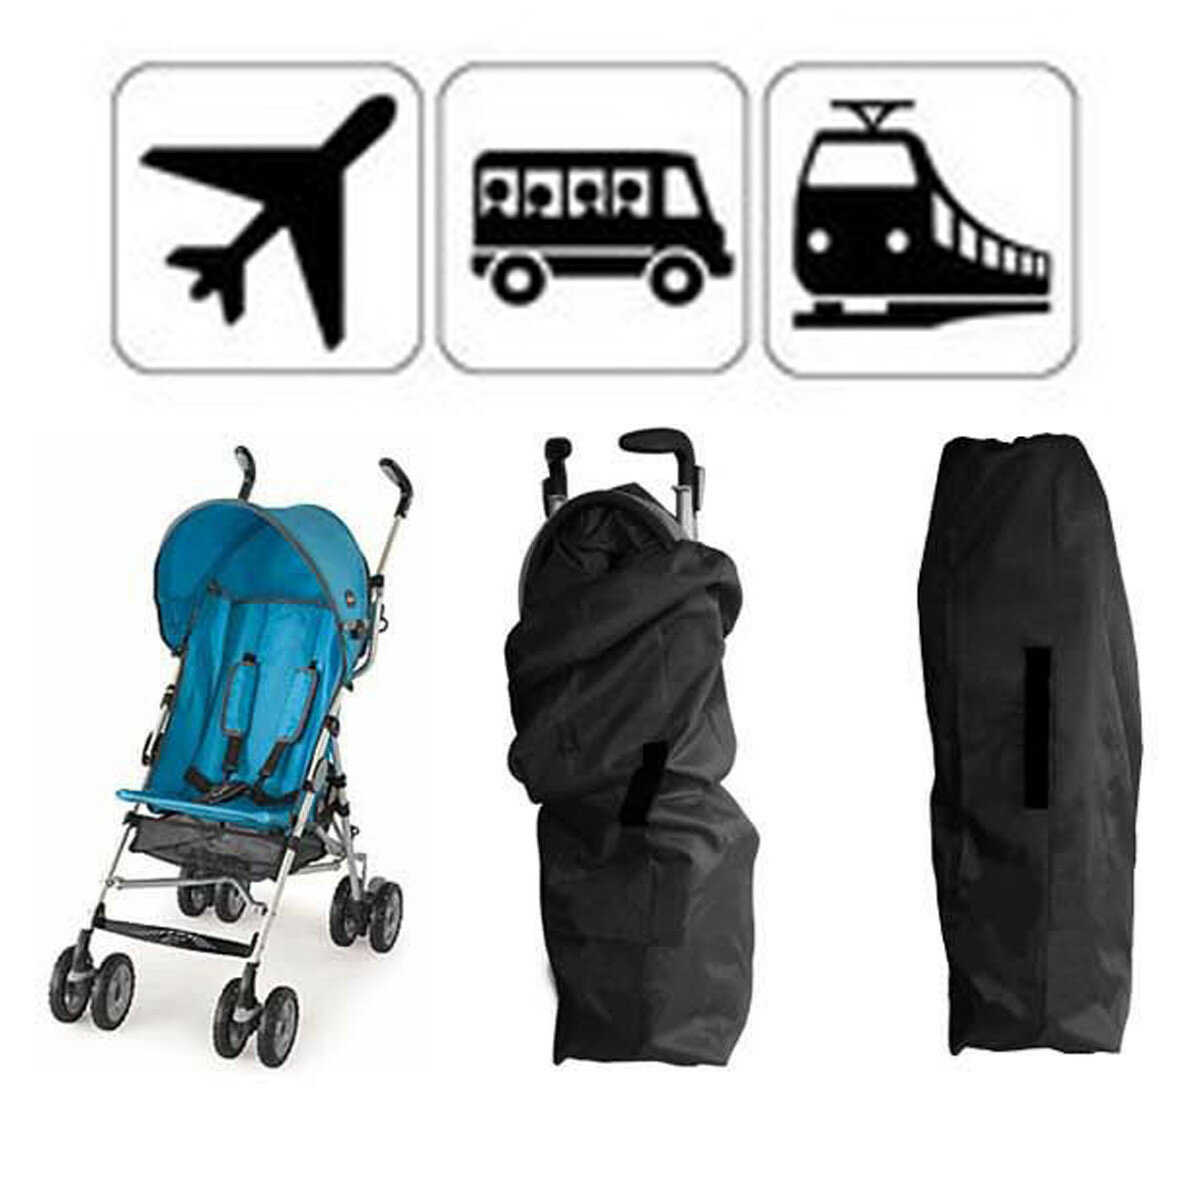 baby stroller travel bag